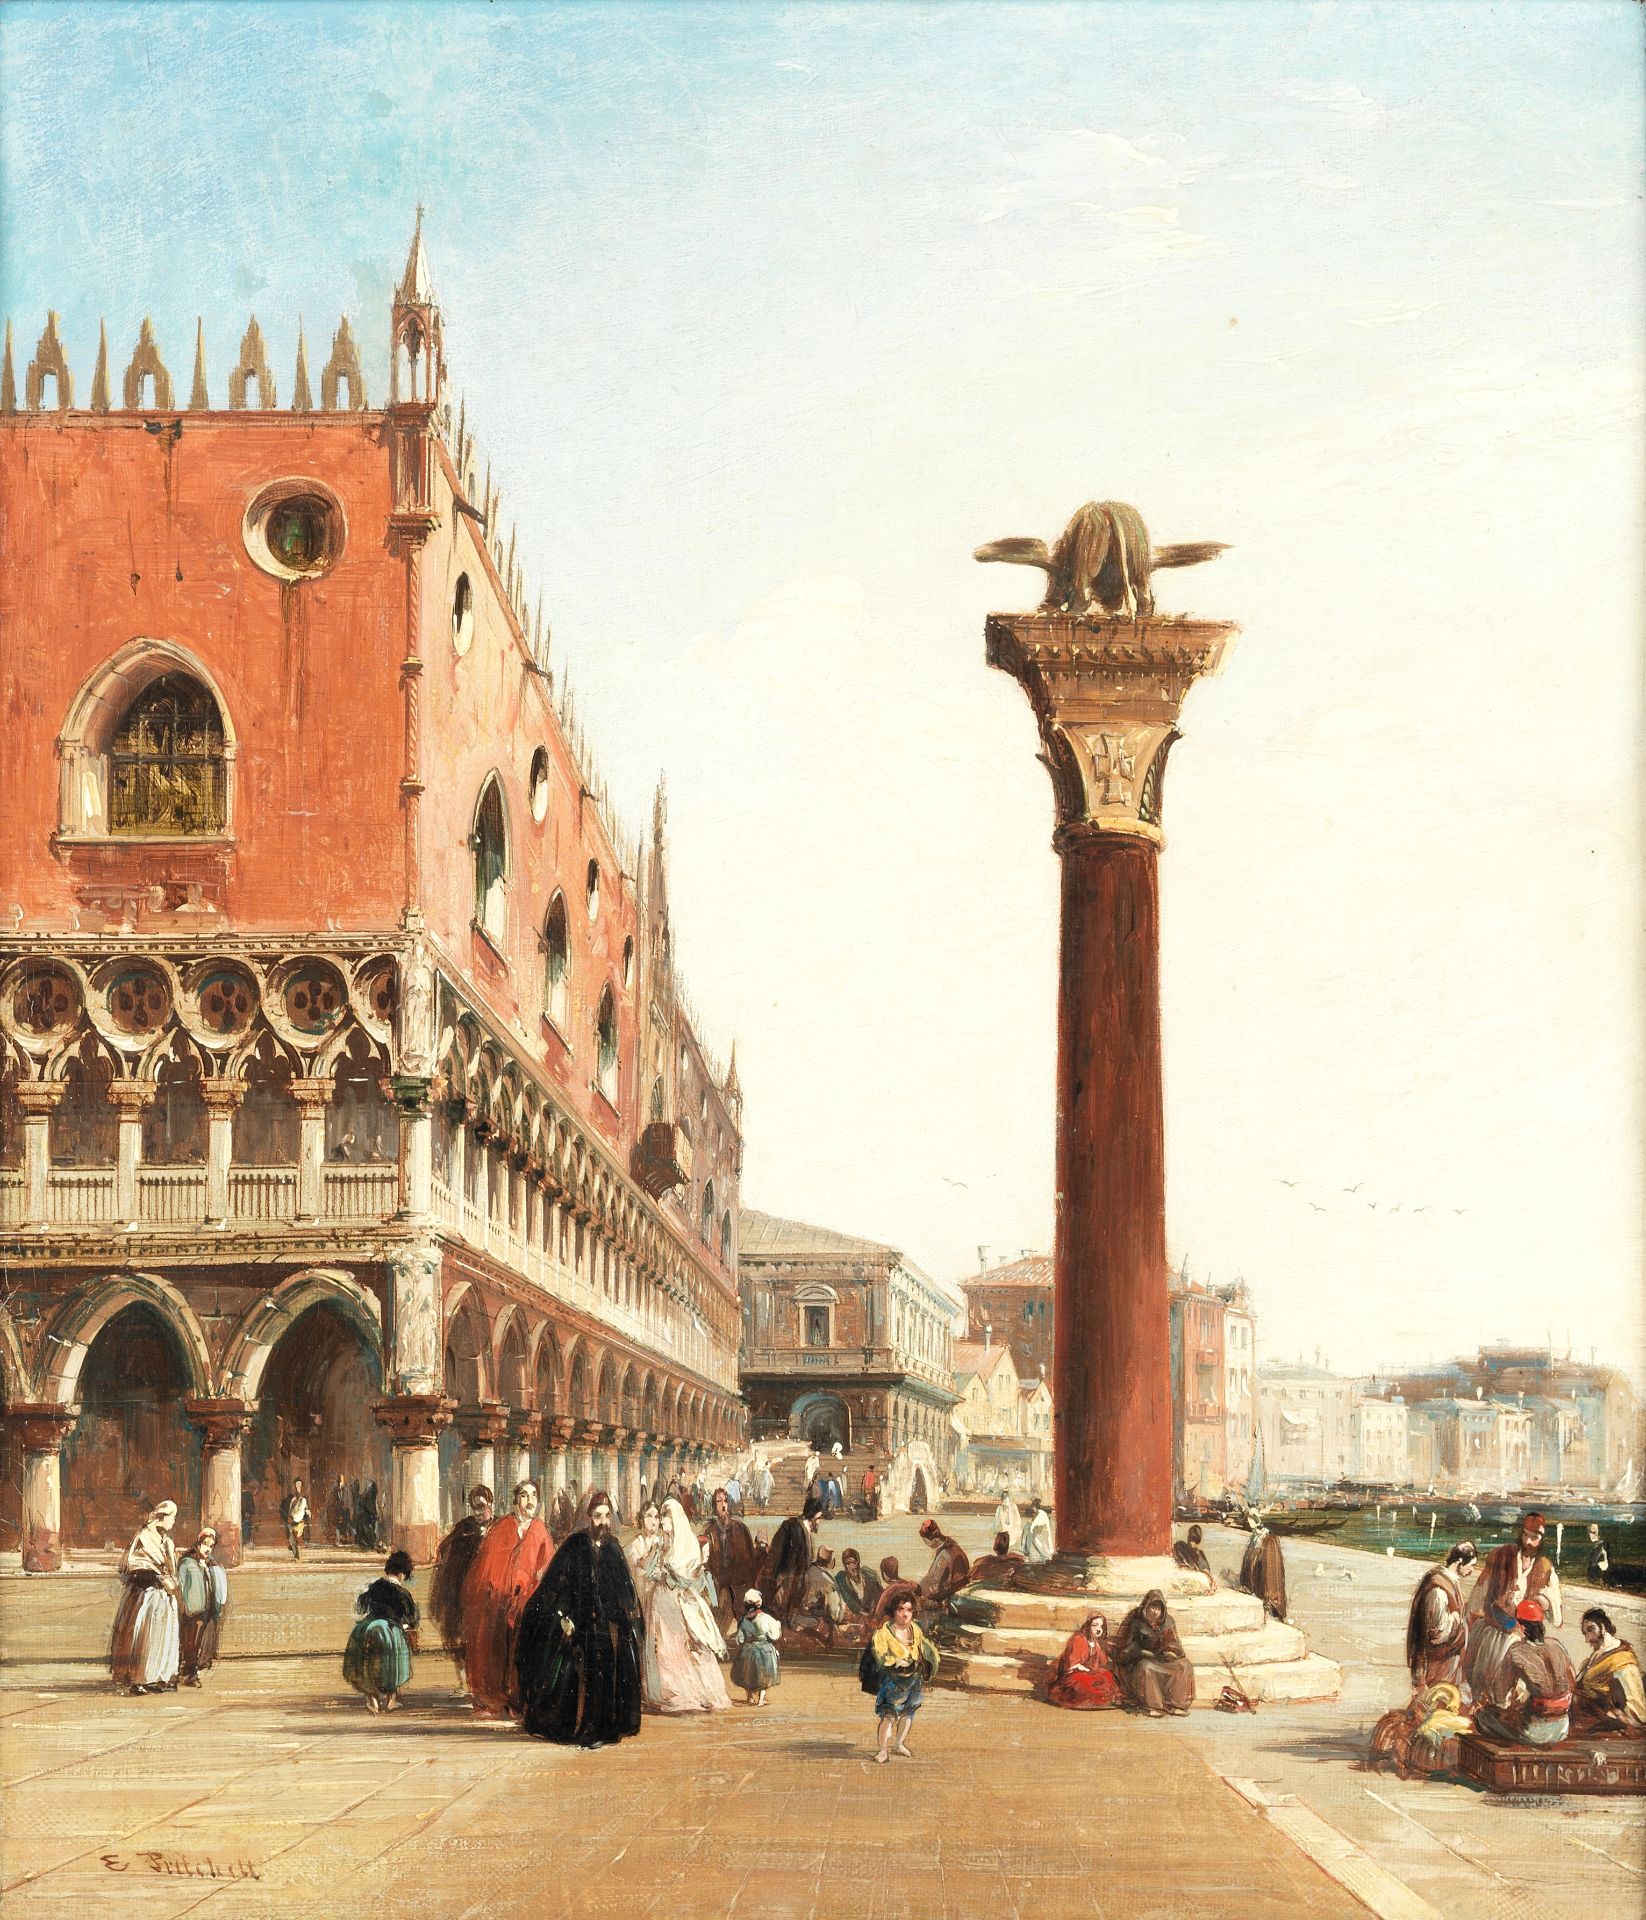 Edward Pritchett (British, 1828-1864) The Doge's Palace, Venice